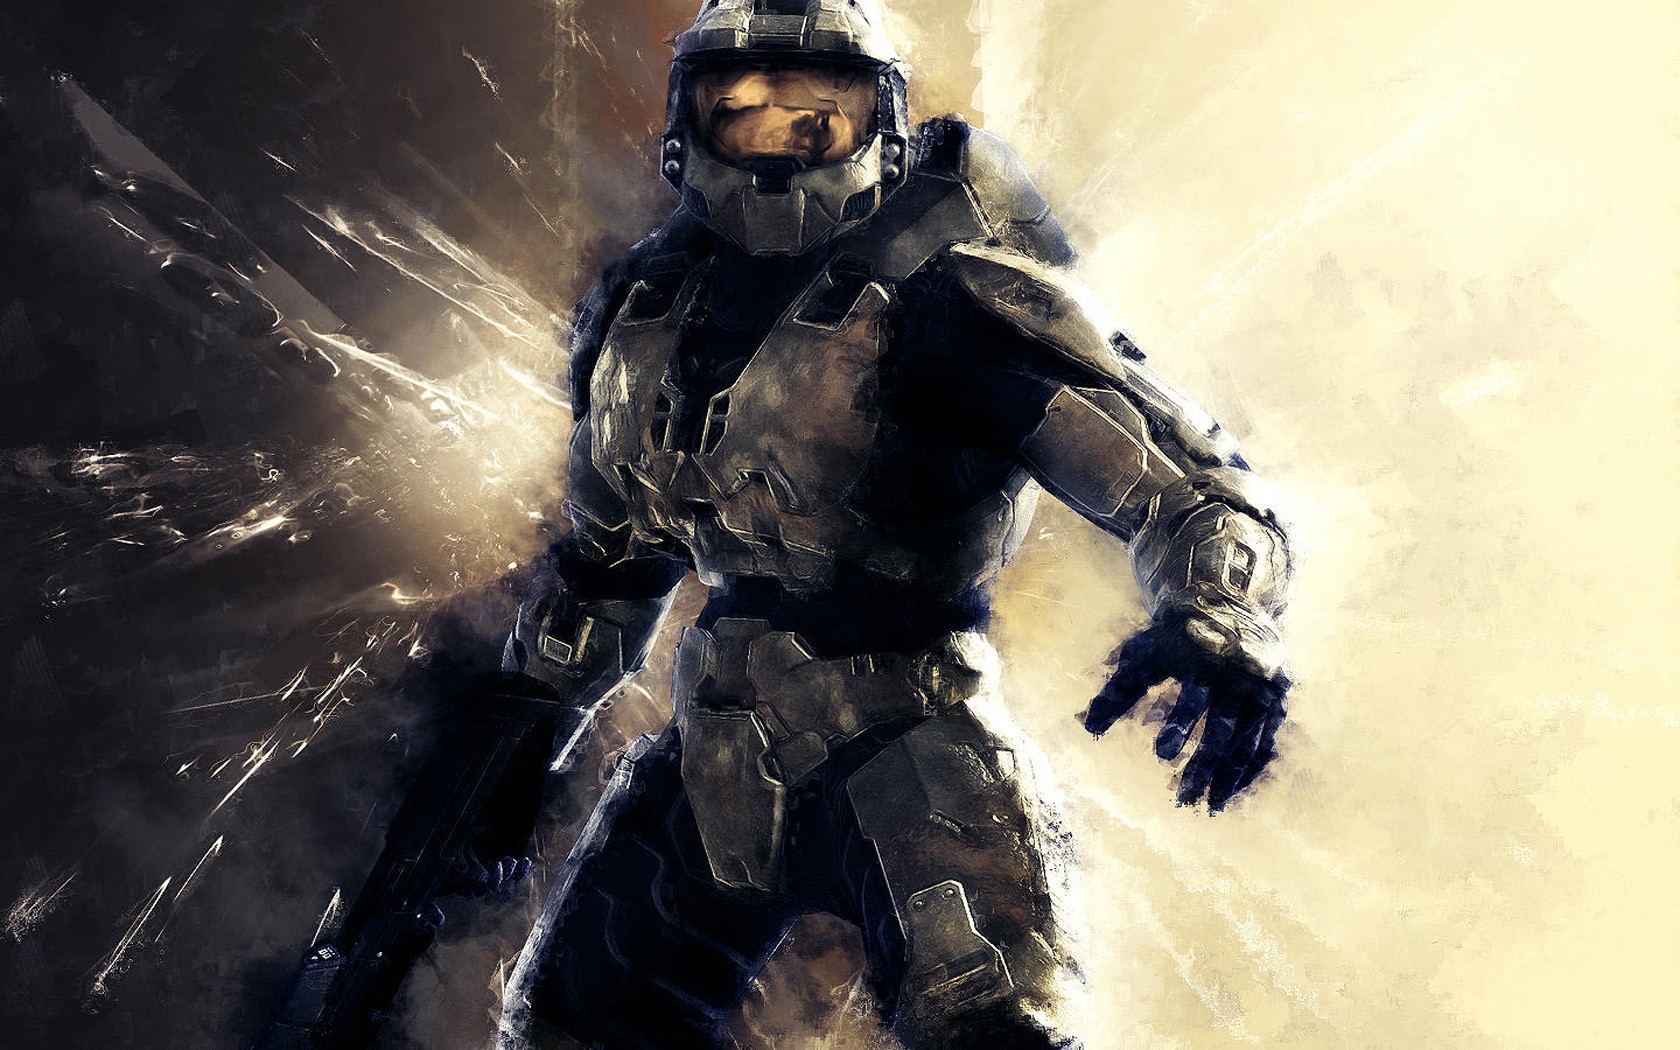 General 1680x1050 Halo 4 video games video game art science fiction DeviantArt Master Chief (Halo) futuristic armor